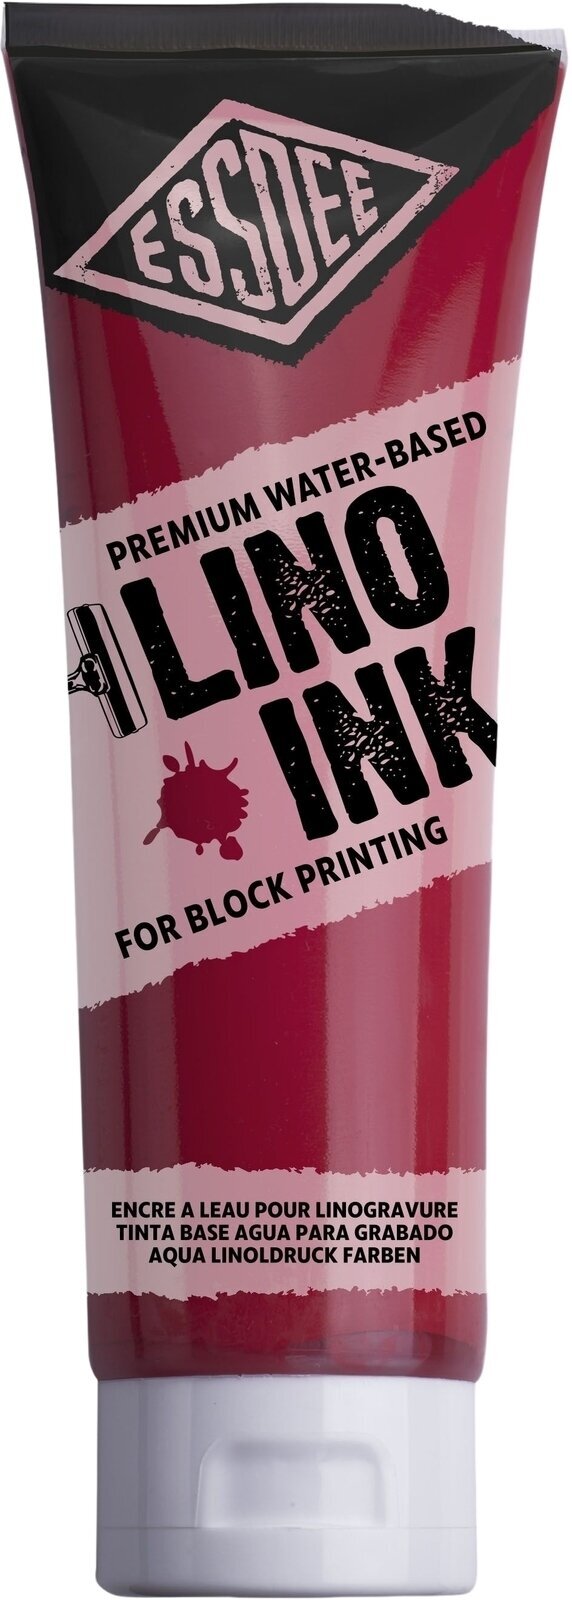 Boja za linorez Essdee Block Printing Ink Boja za linorez Brilliant Red (Scarlet) 300 ml